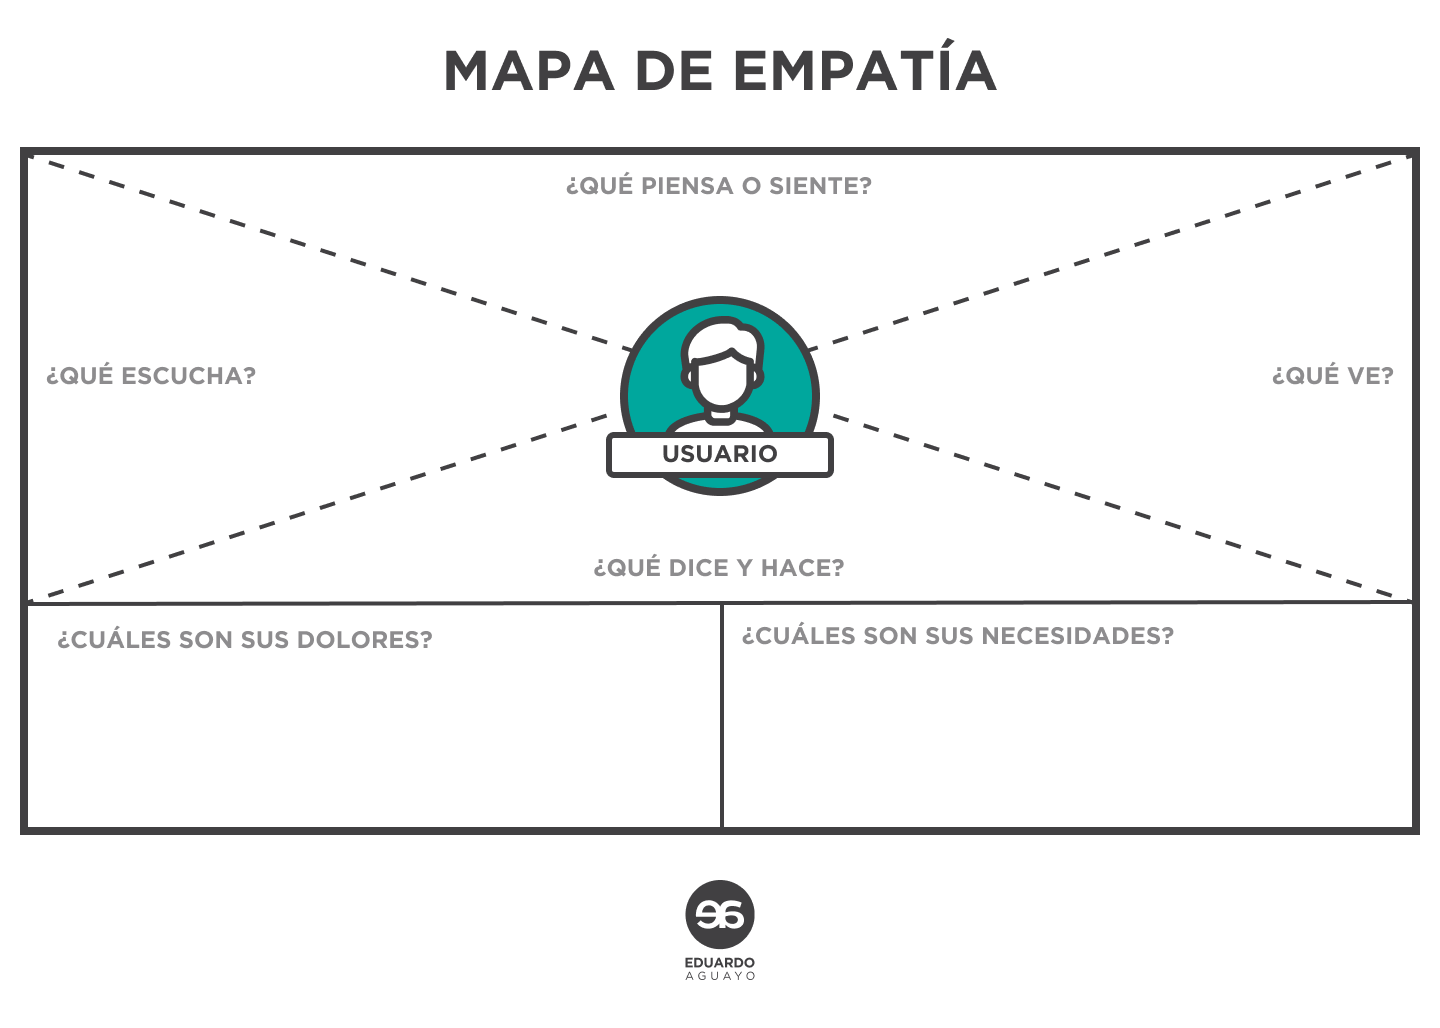 mapa de empatia, empathy map, design thinking, insight ux, insight, investigacion ux